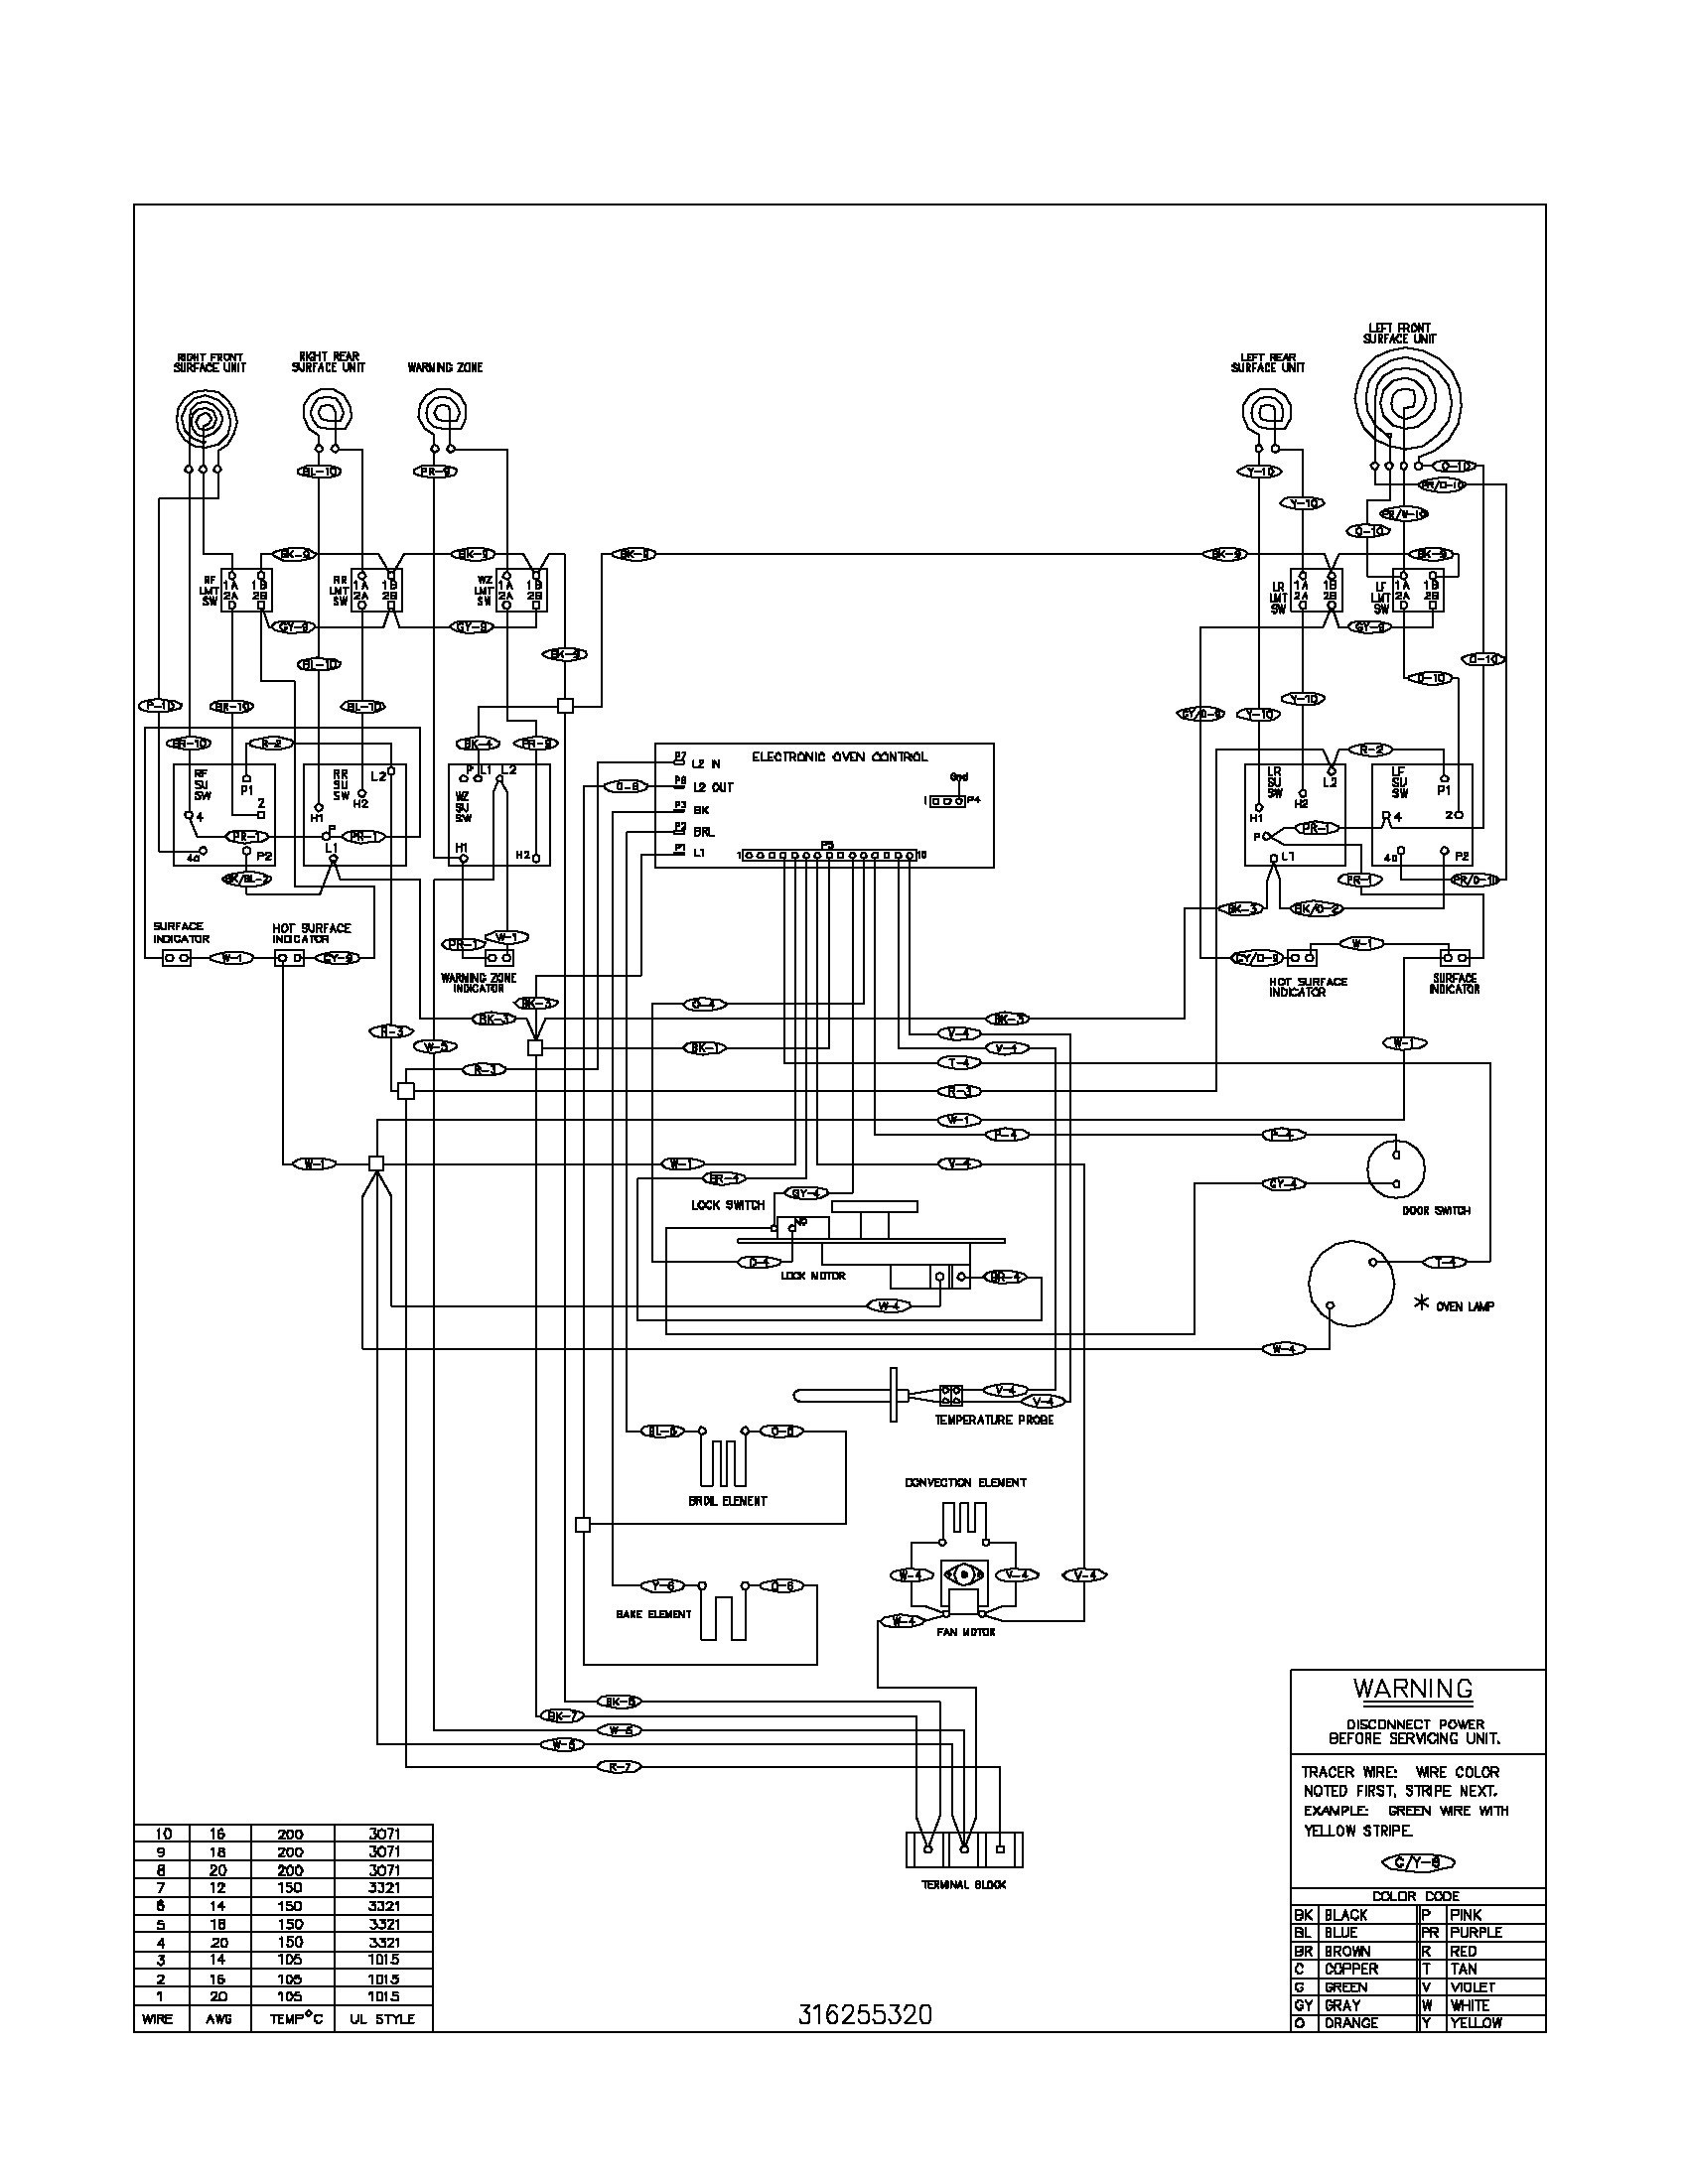 Kitchenaid Mixer Parts Diagram Kitchenaid Mixer Wiring Diagram Wire Management Wiring Diagram